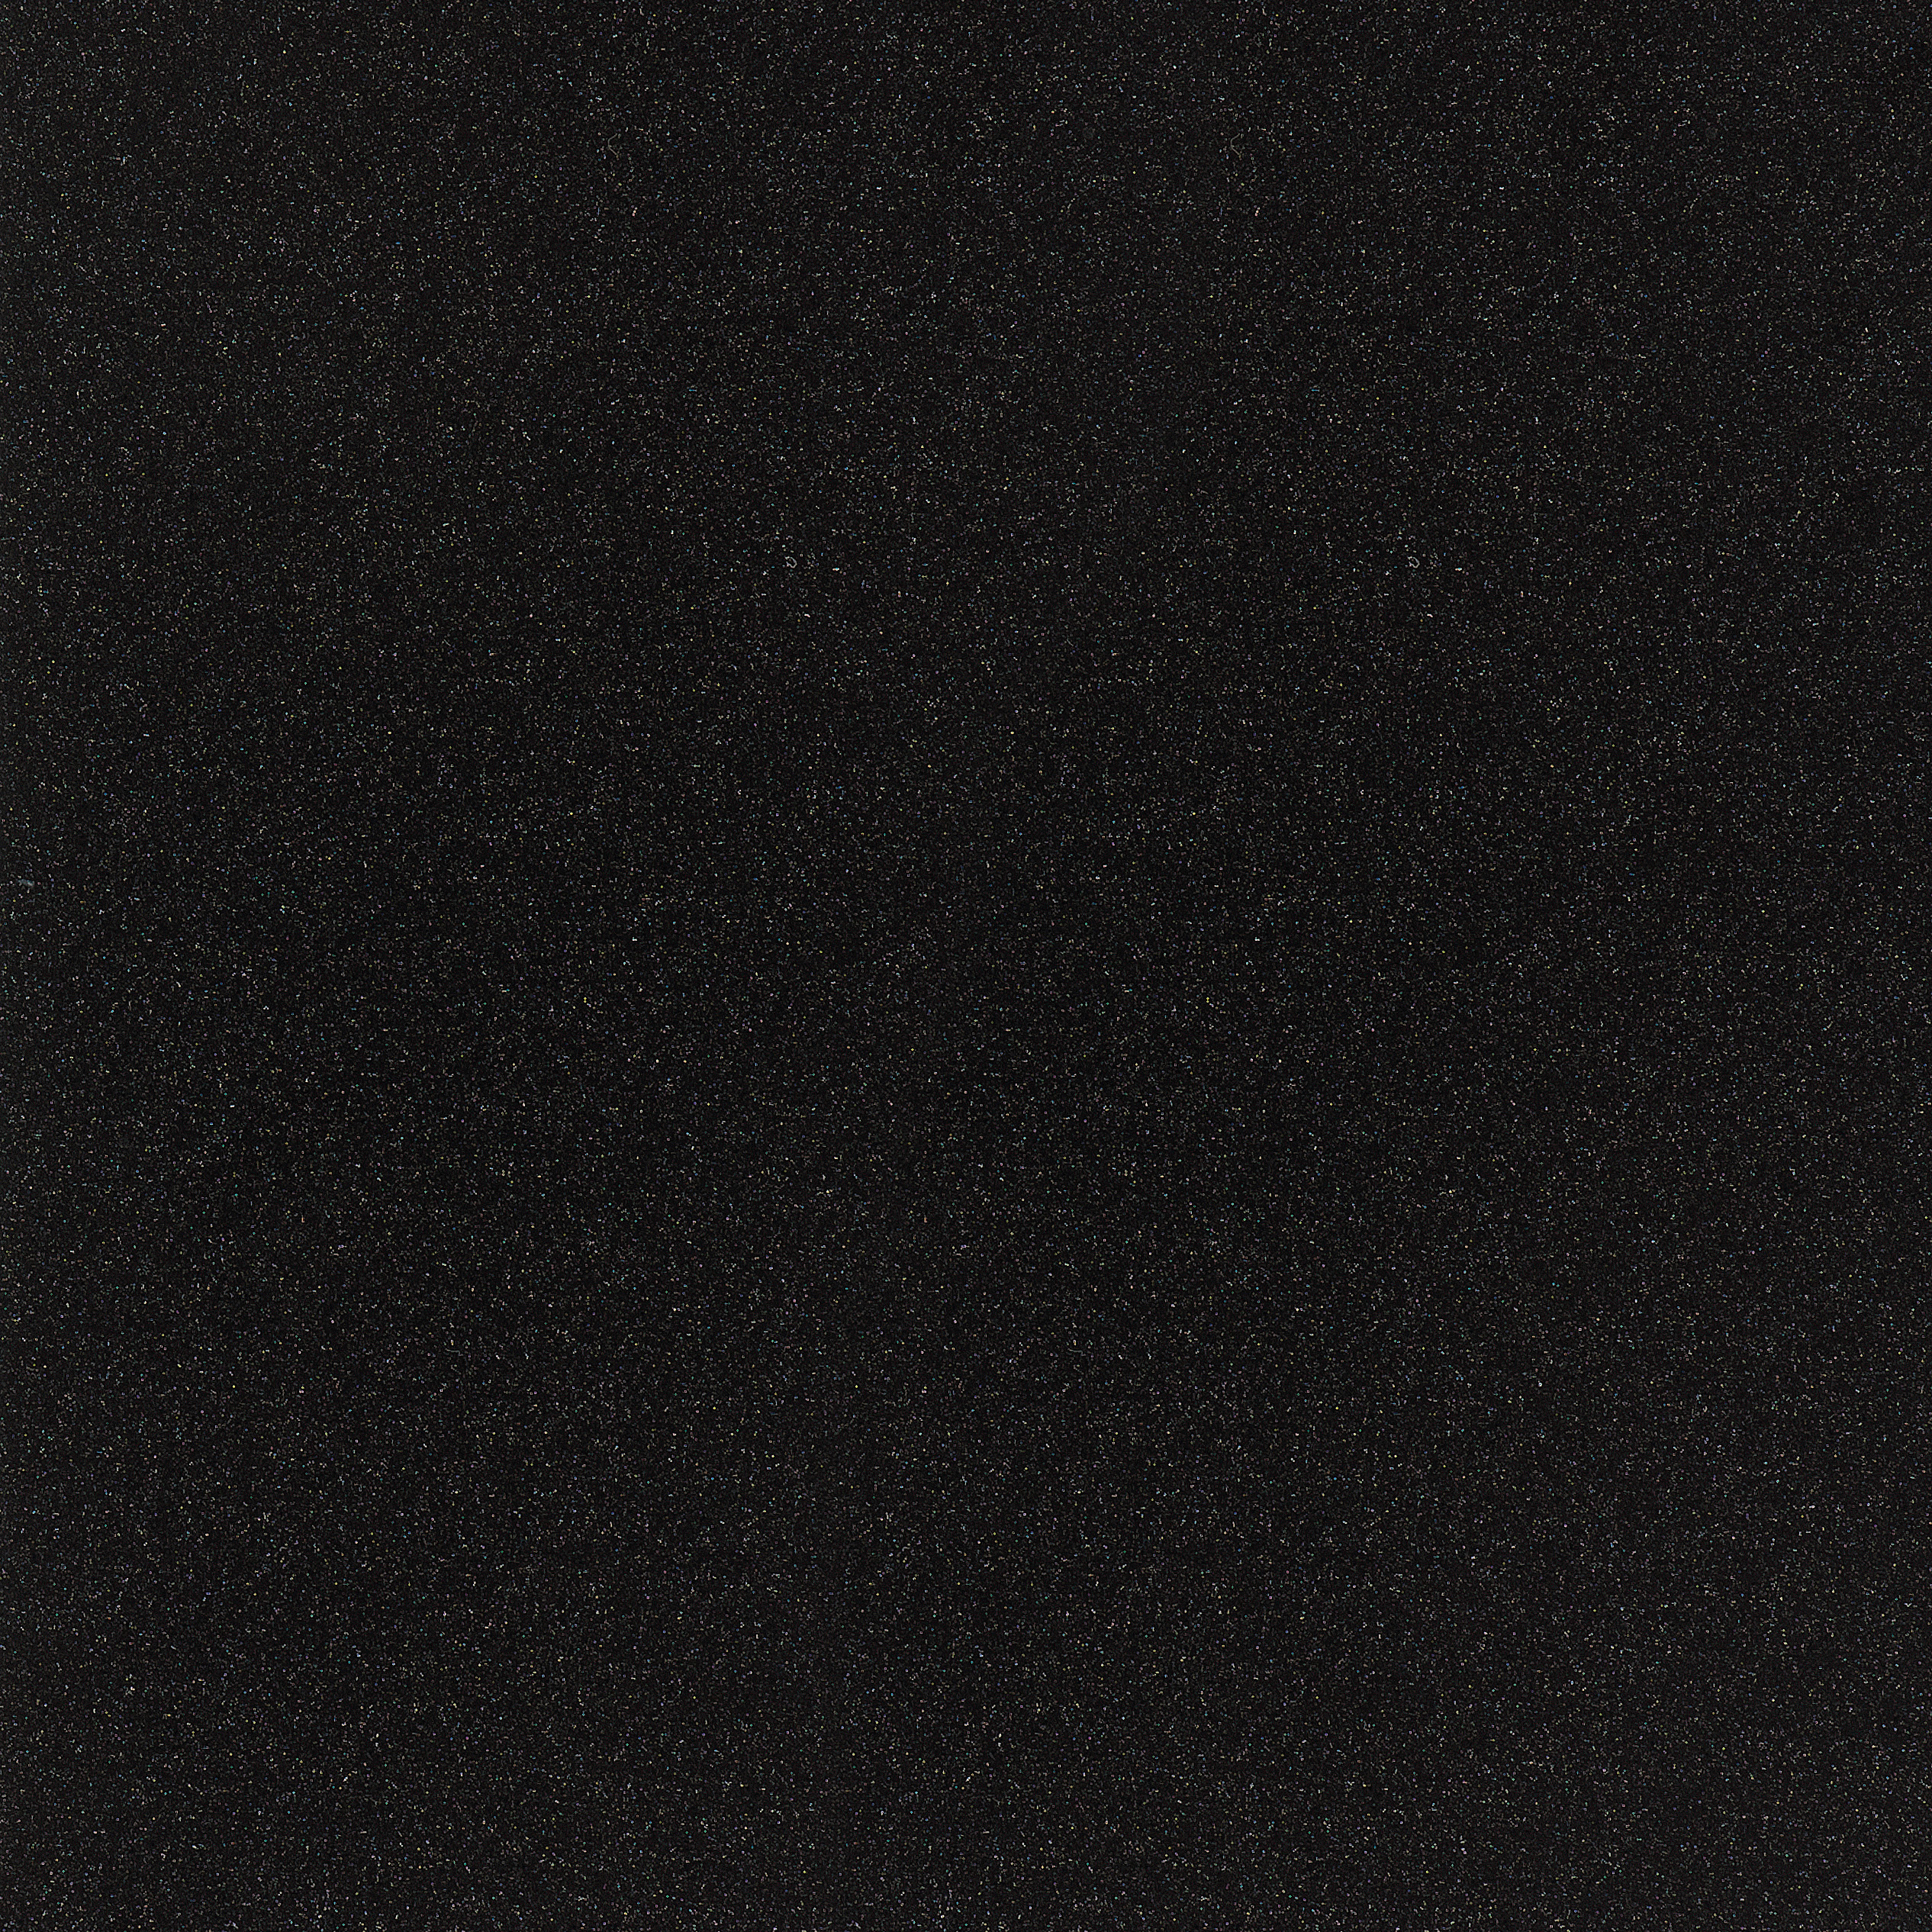 Duarti By Calypso Black Stone Solid Surface Slimline Worktop - 1044 x 230 x 12mm